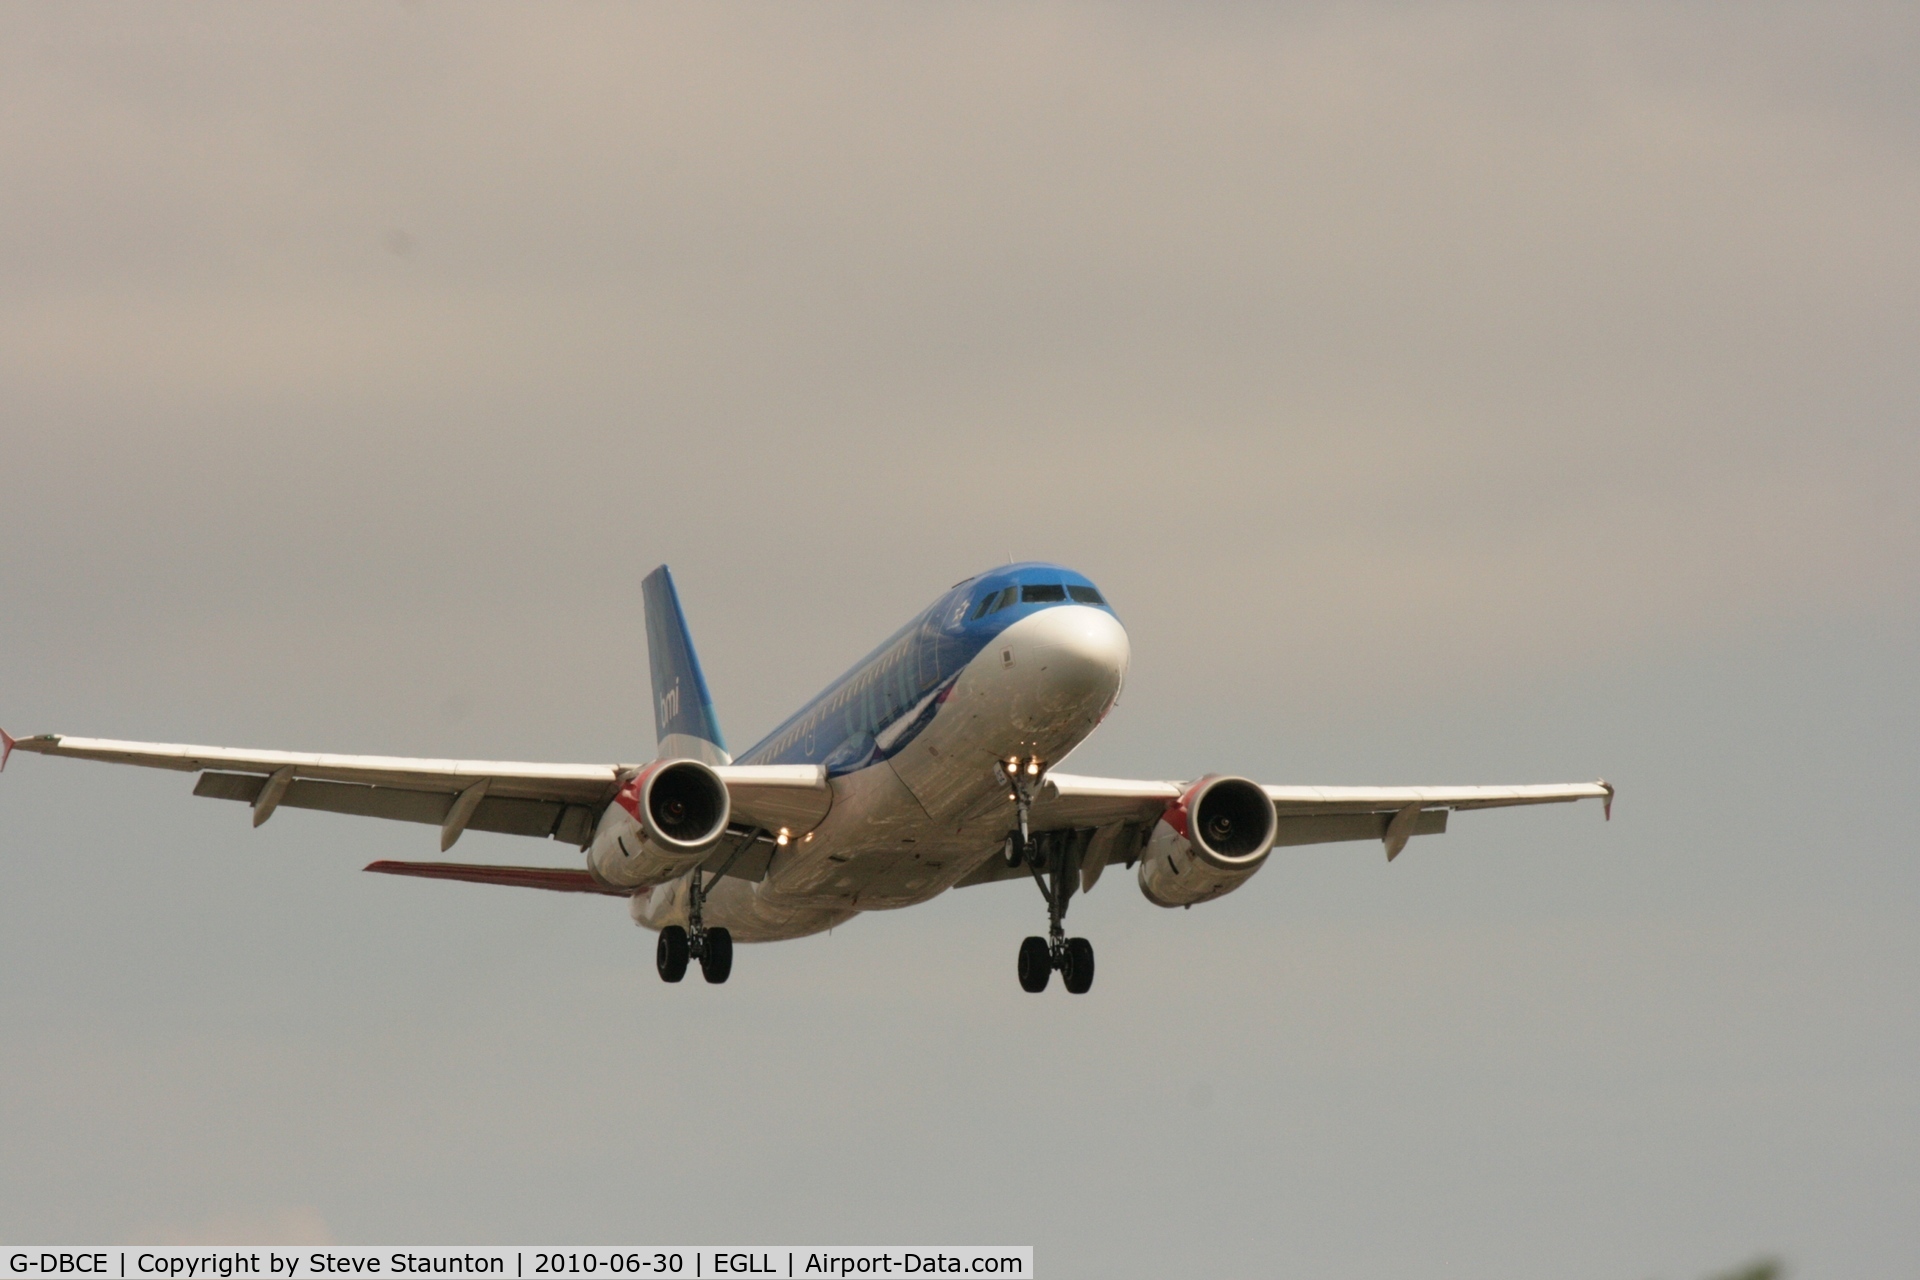 G-DBCE, 2005 Airbus A319-131 C/N 2429, Taken at Heathrow Airport, June 2010